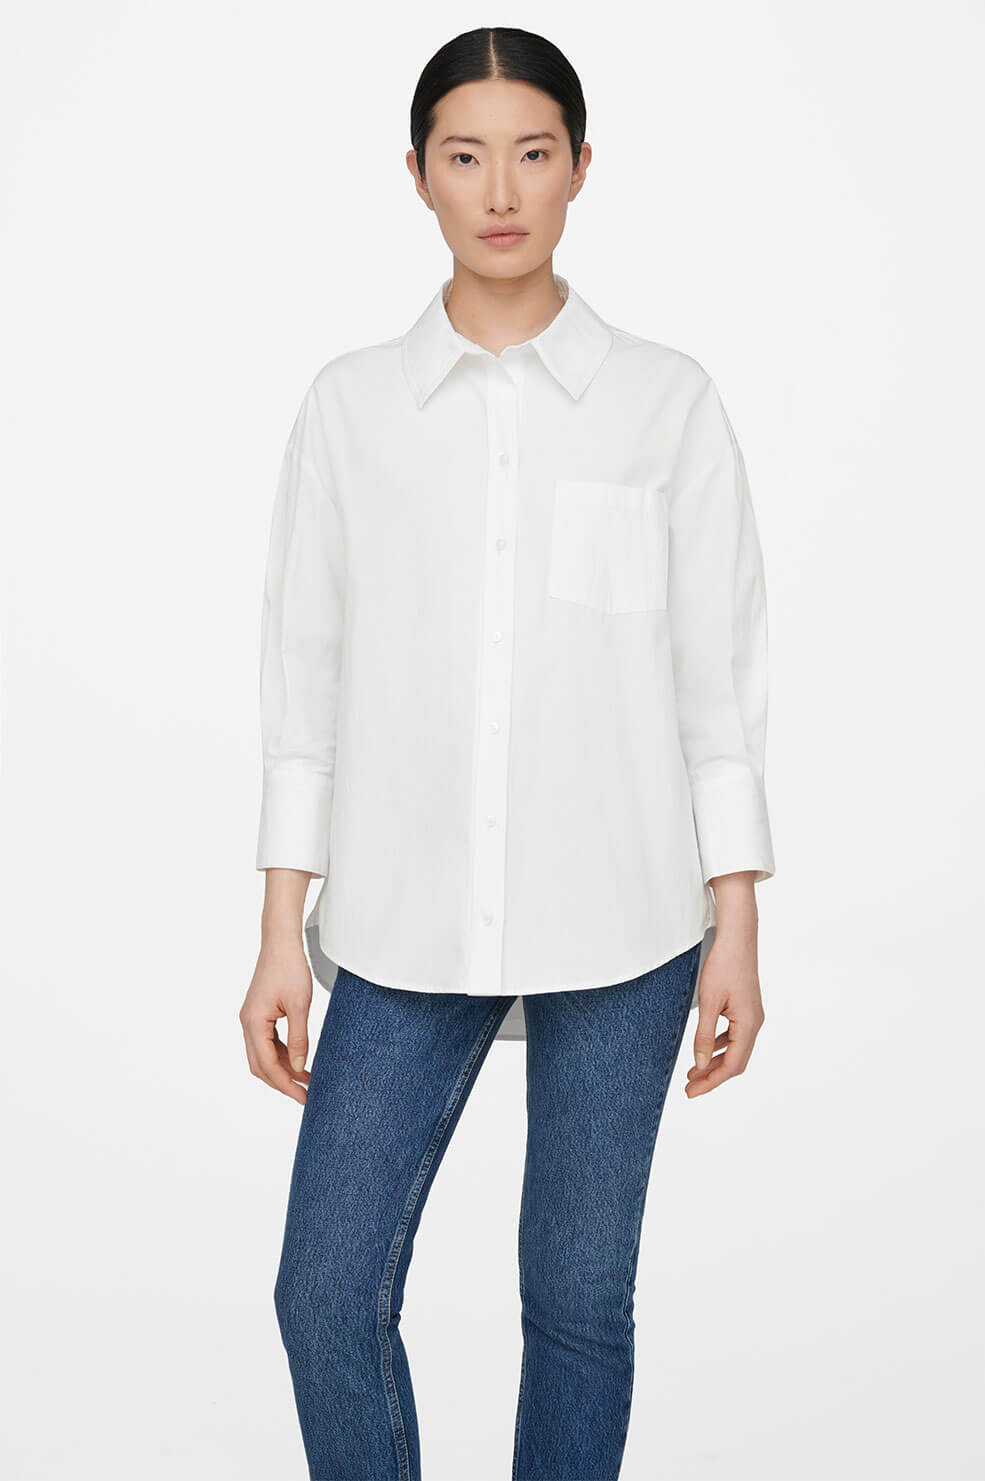 Anine Bing Mika Shirt - White